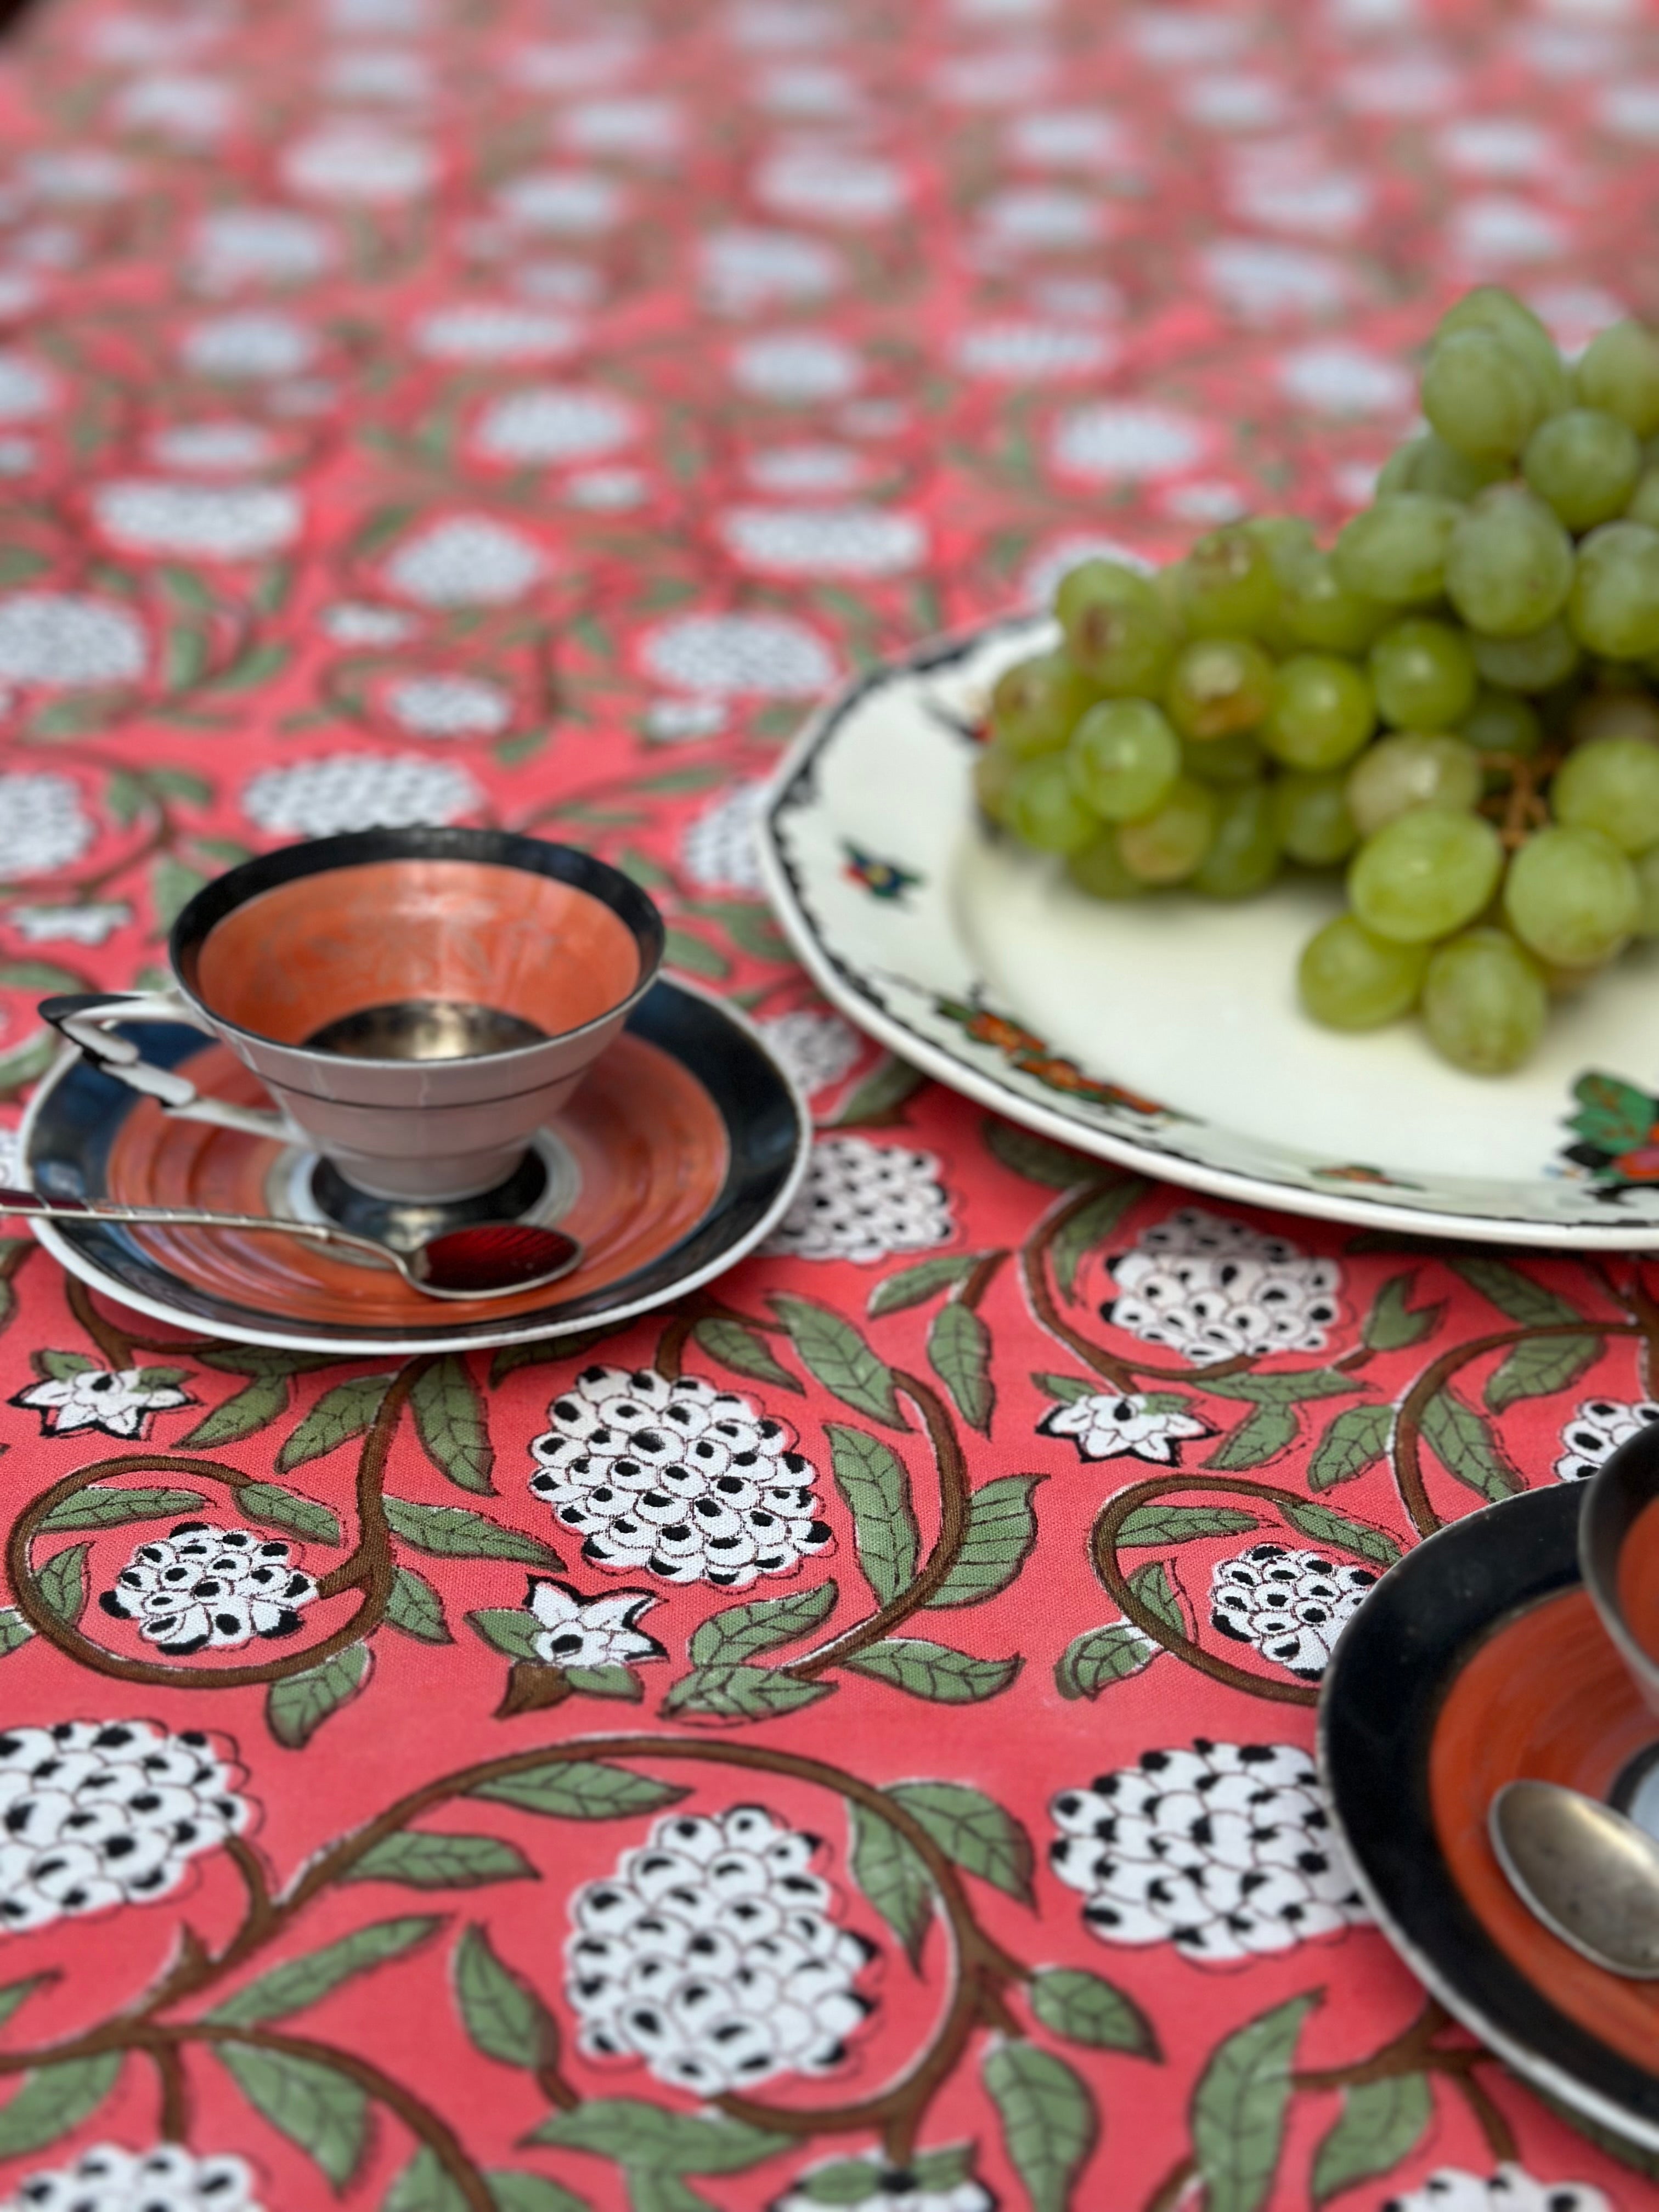 Wild Bazaar Mulberry Tablecloth